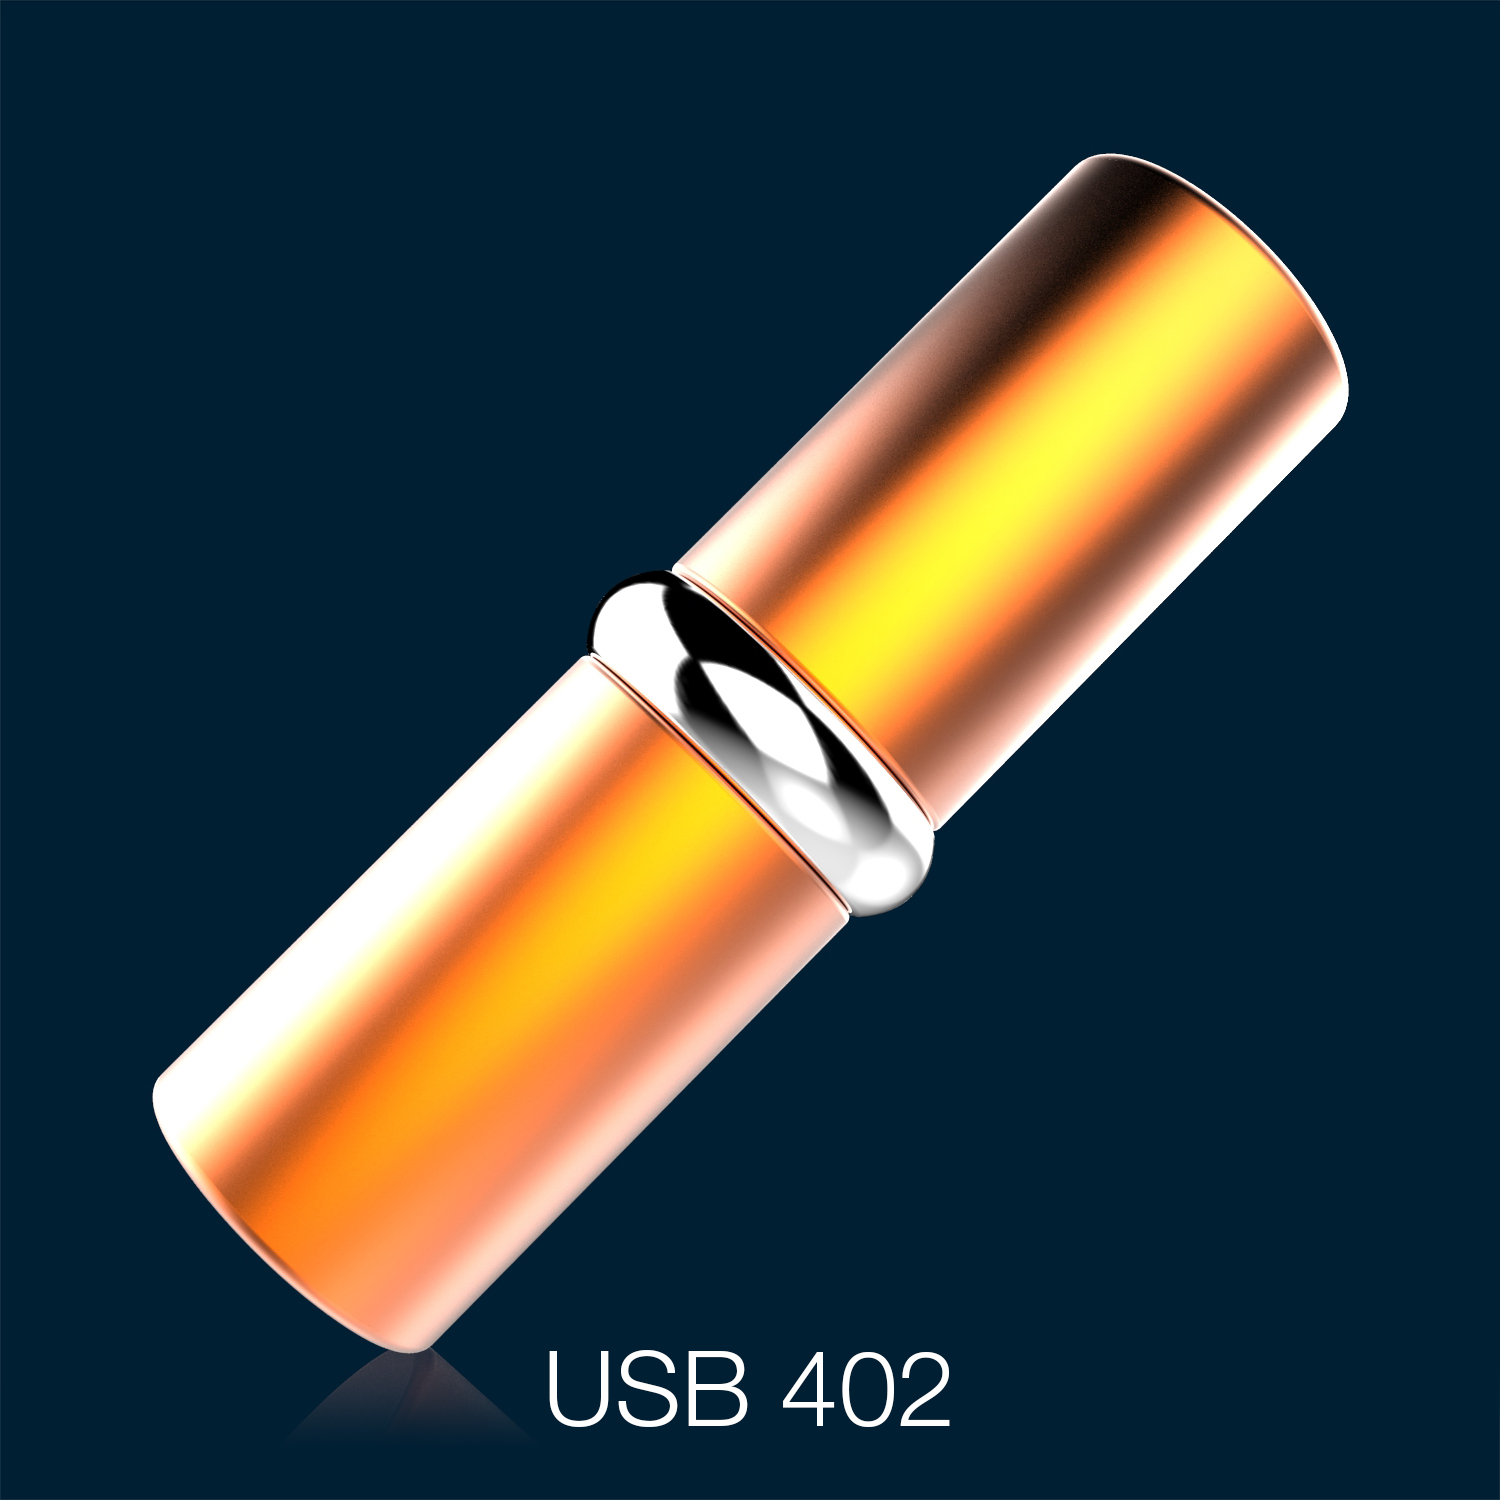 USB 402